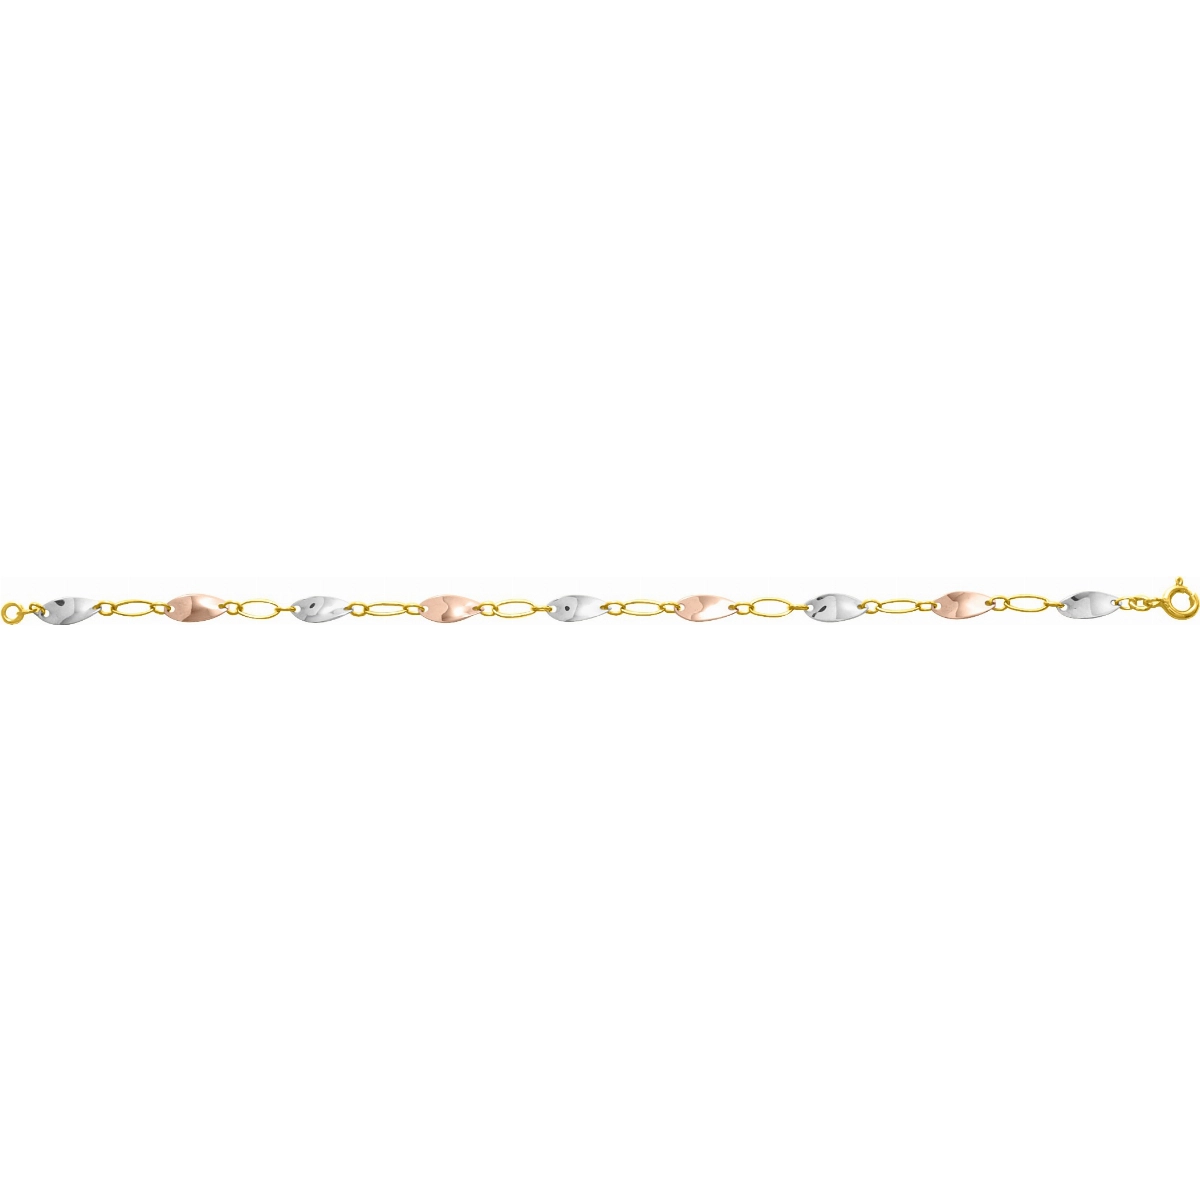 Bracelet 18K 3TG Lua Blanca  8860L - Size 42